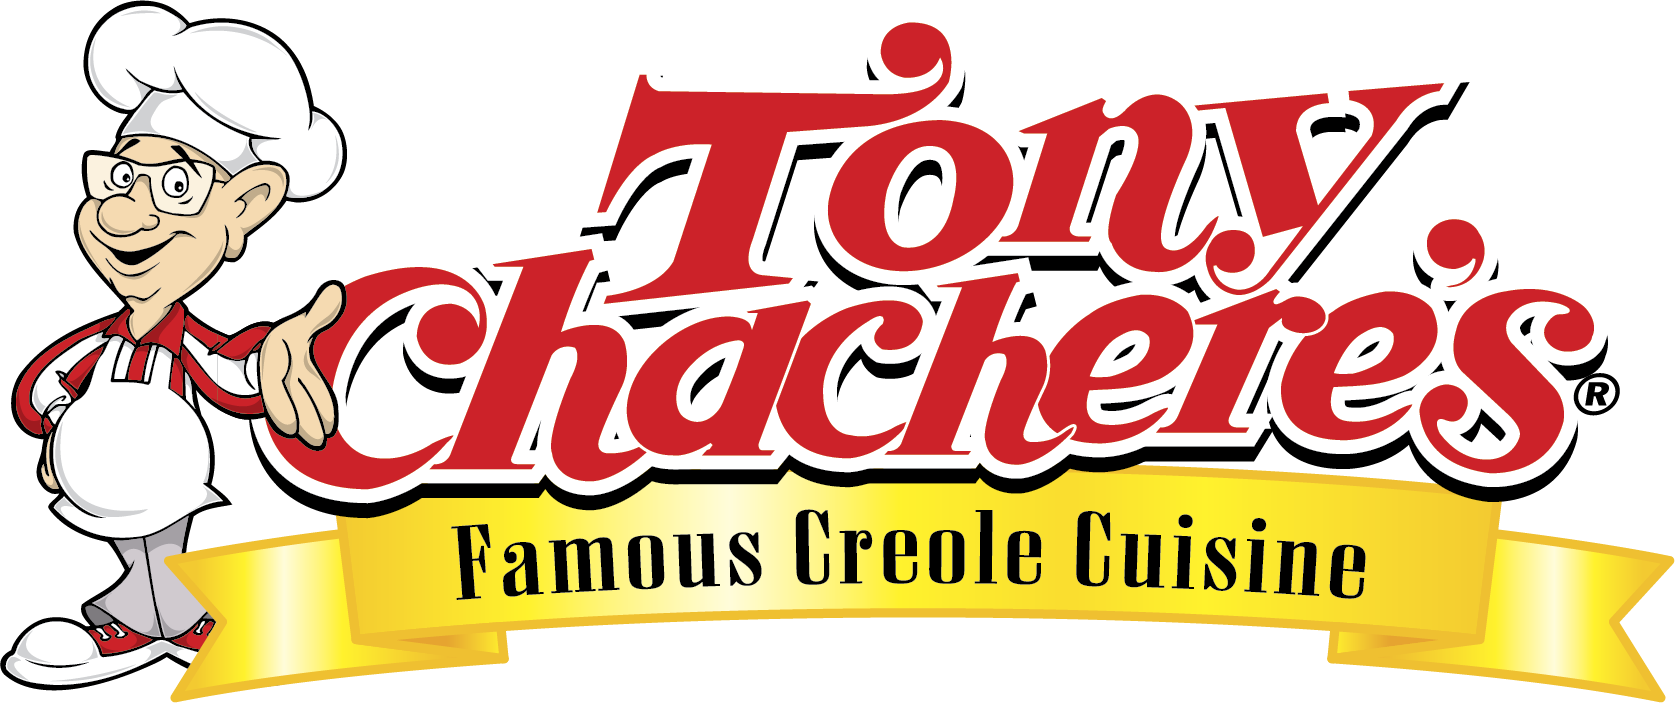 Tony Chachere’s Famous Creole Cuisine's Logo